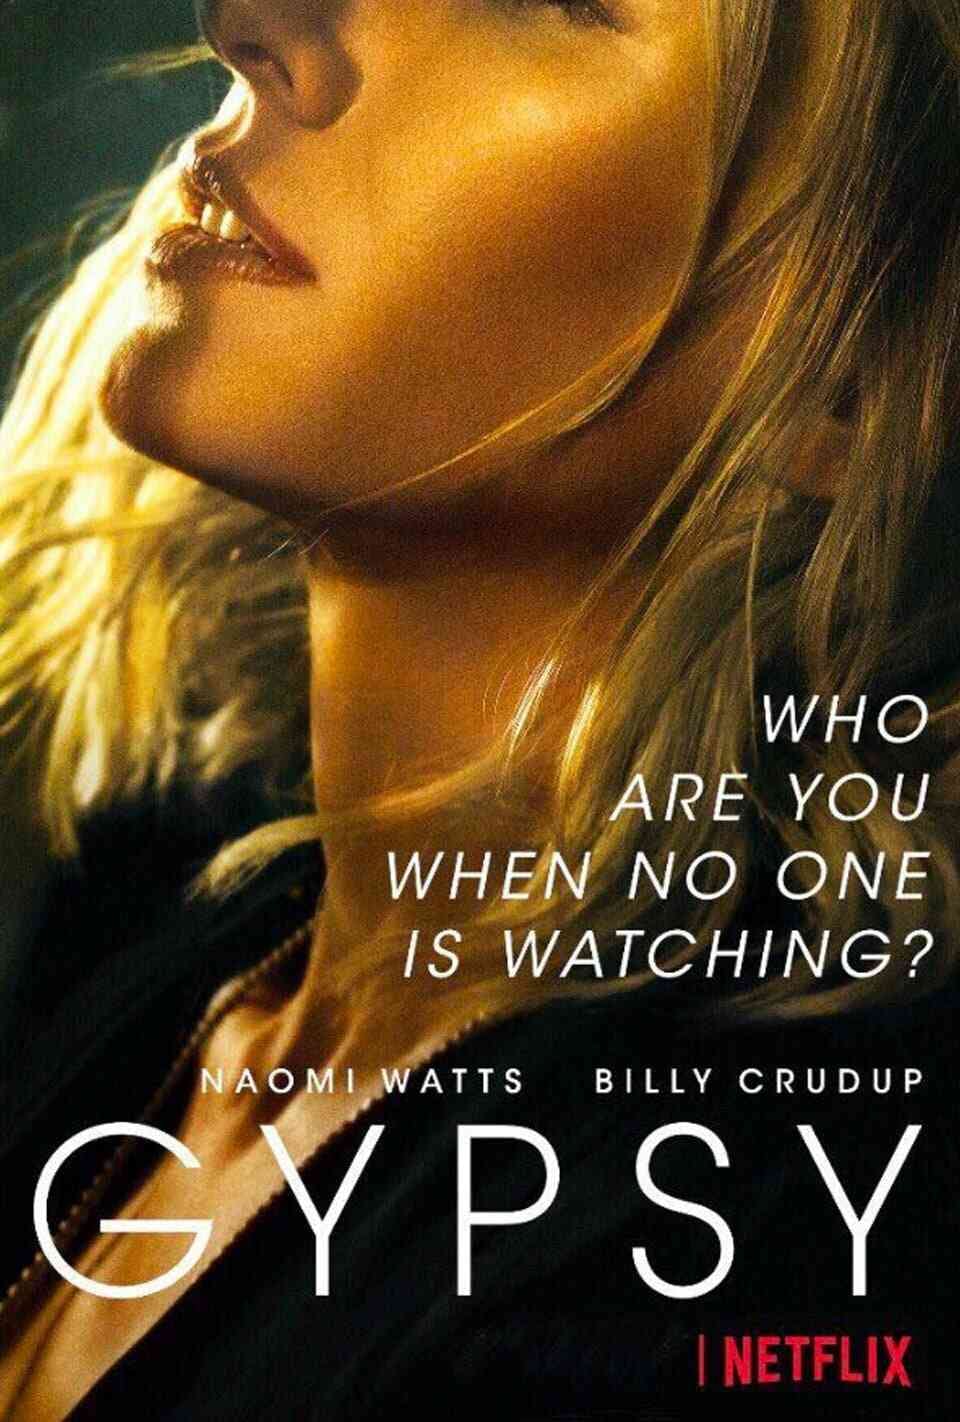 Read Gypsy screenplay (poster)